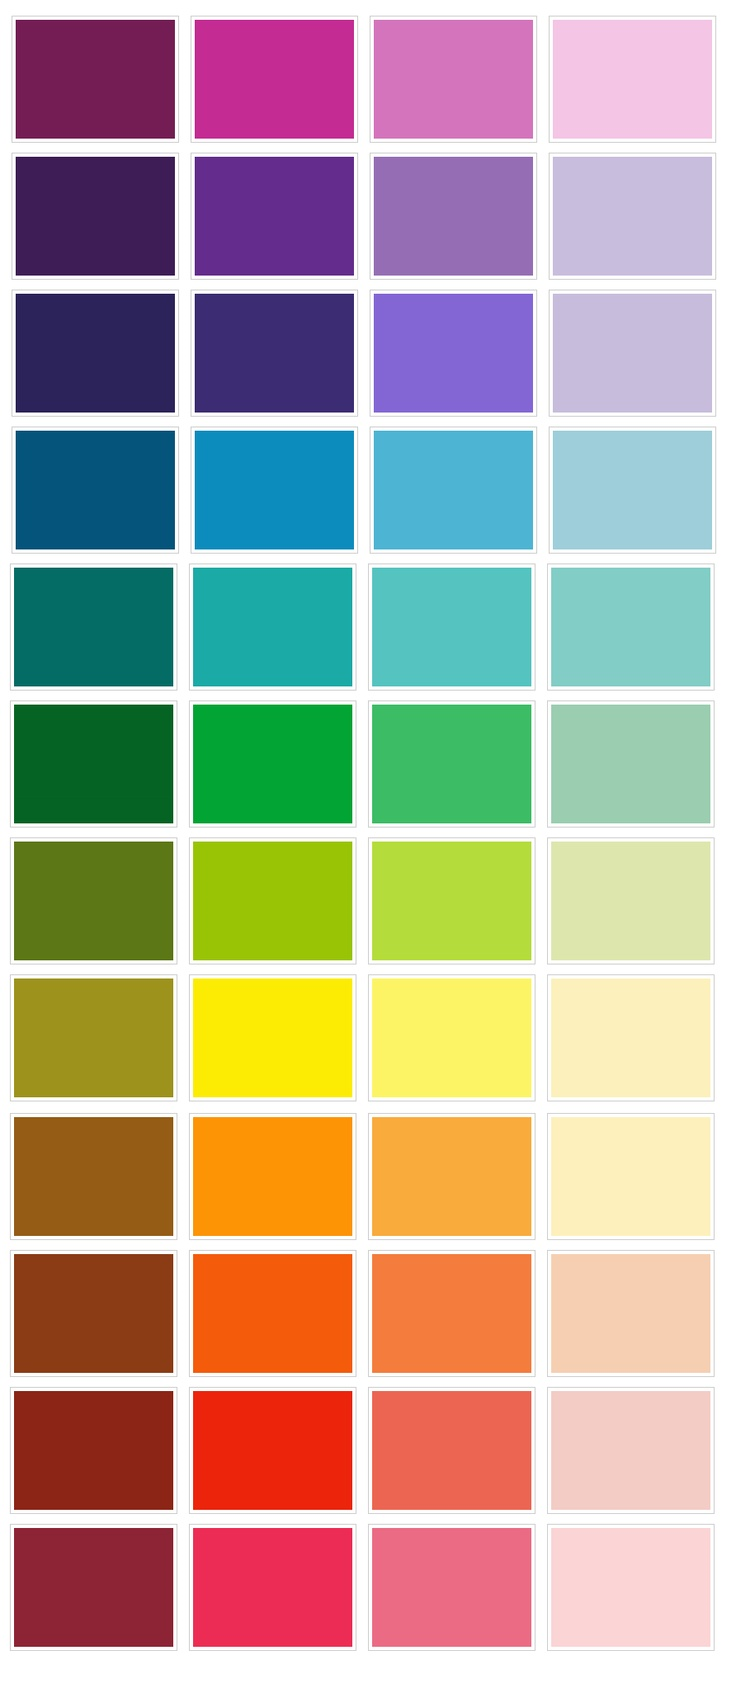 Facebook Colors